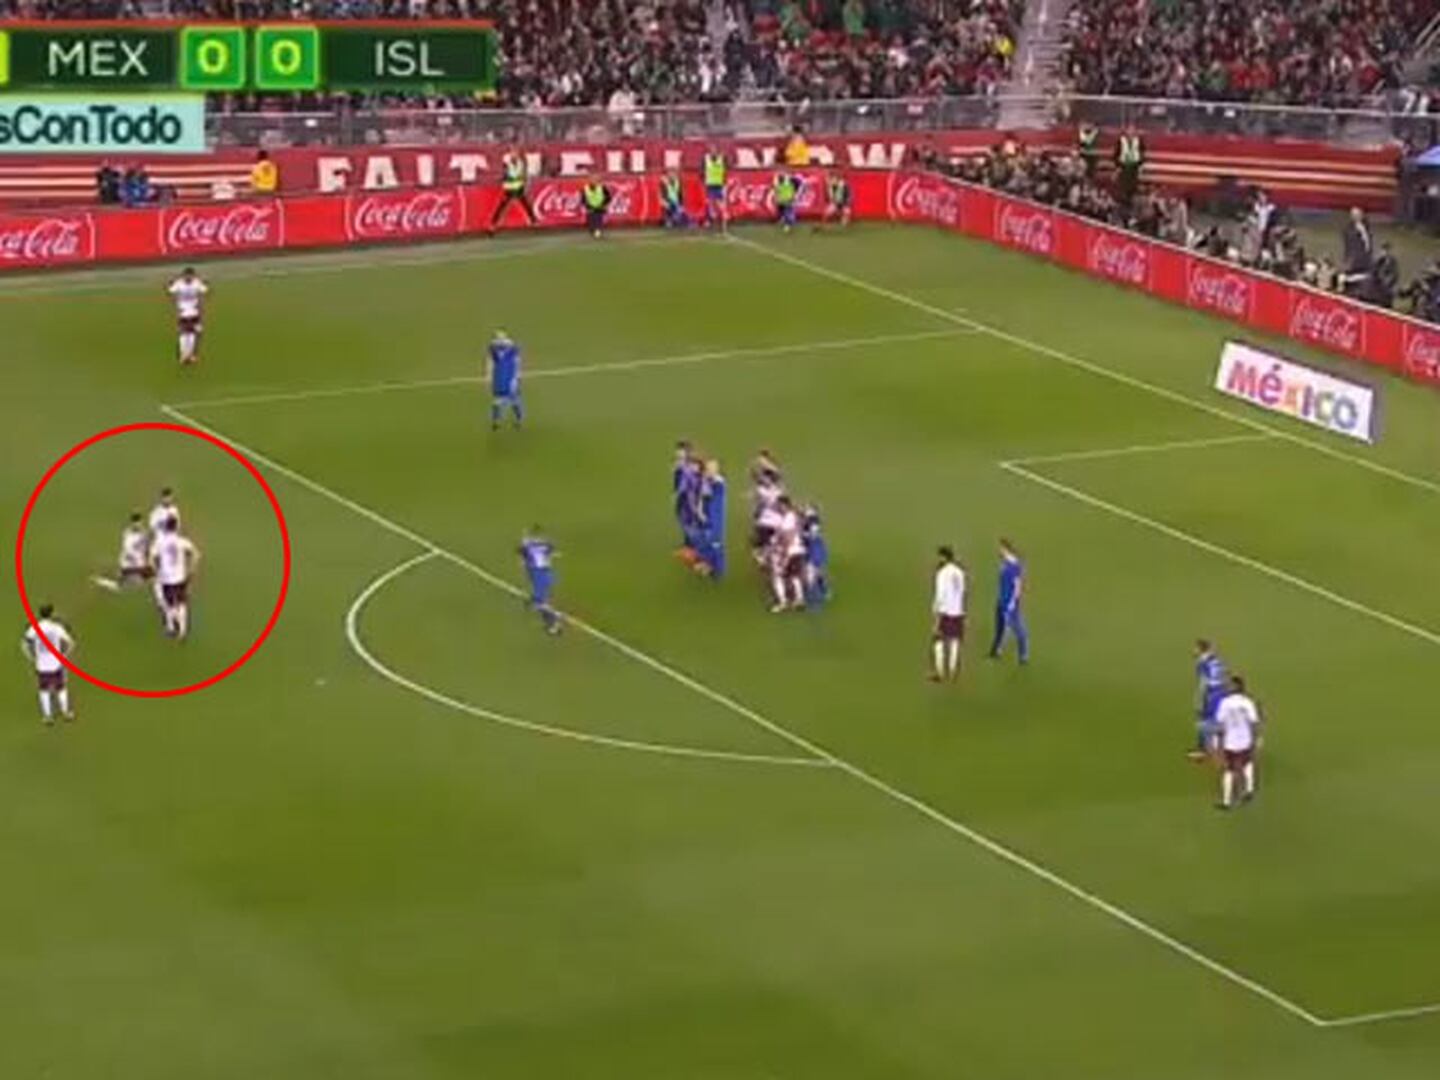 El golazo de tiro libre de Marco Fabián contra Islandia